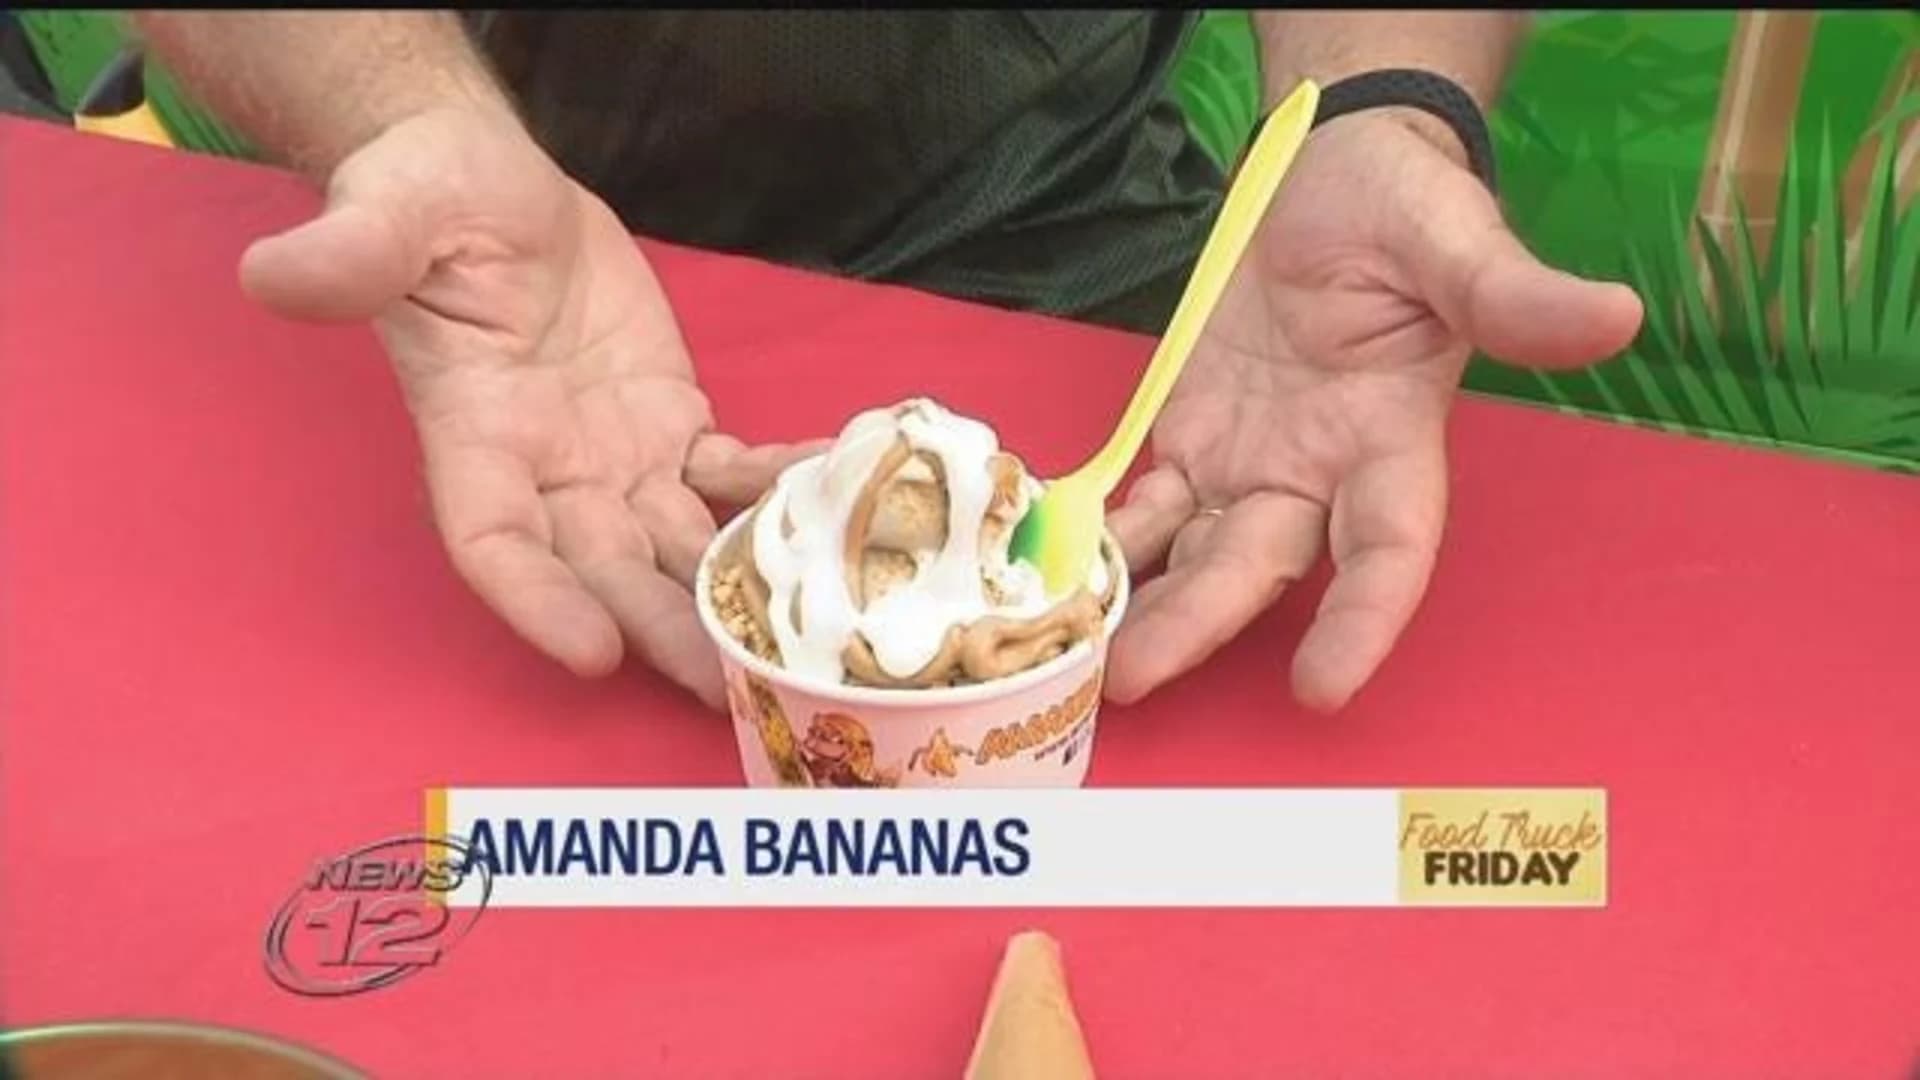 Food Truck Friday: Amanda Bananas